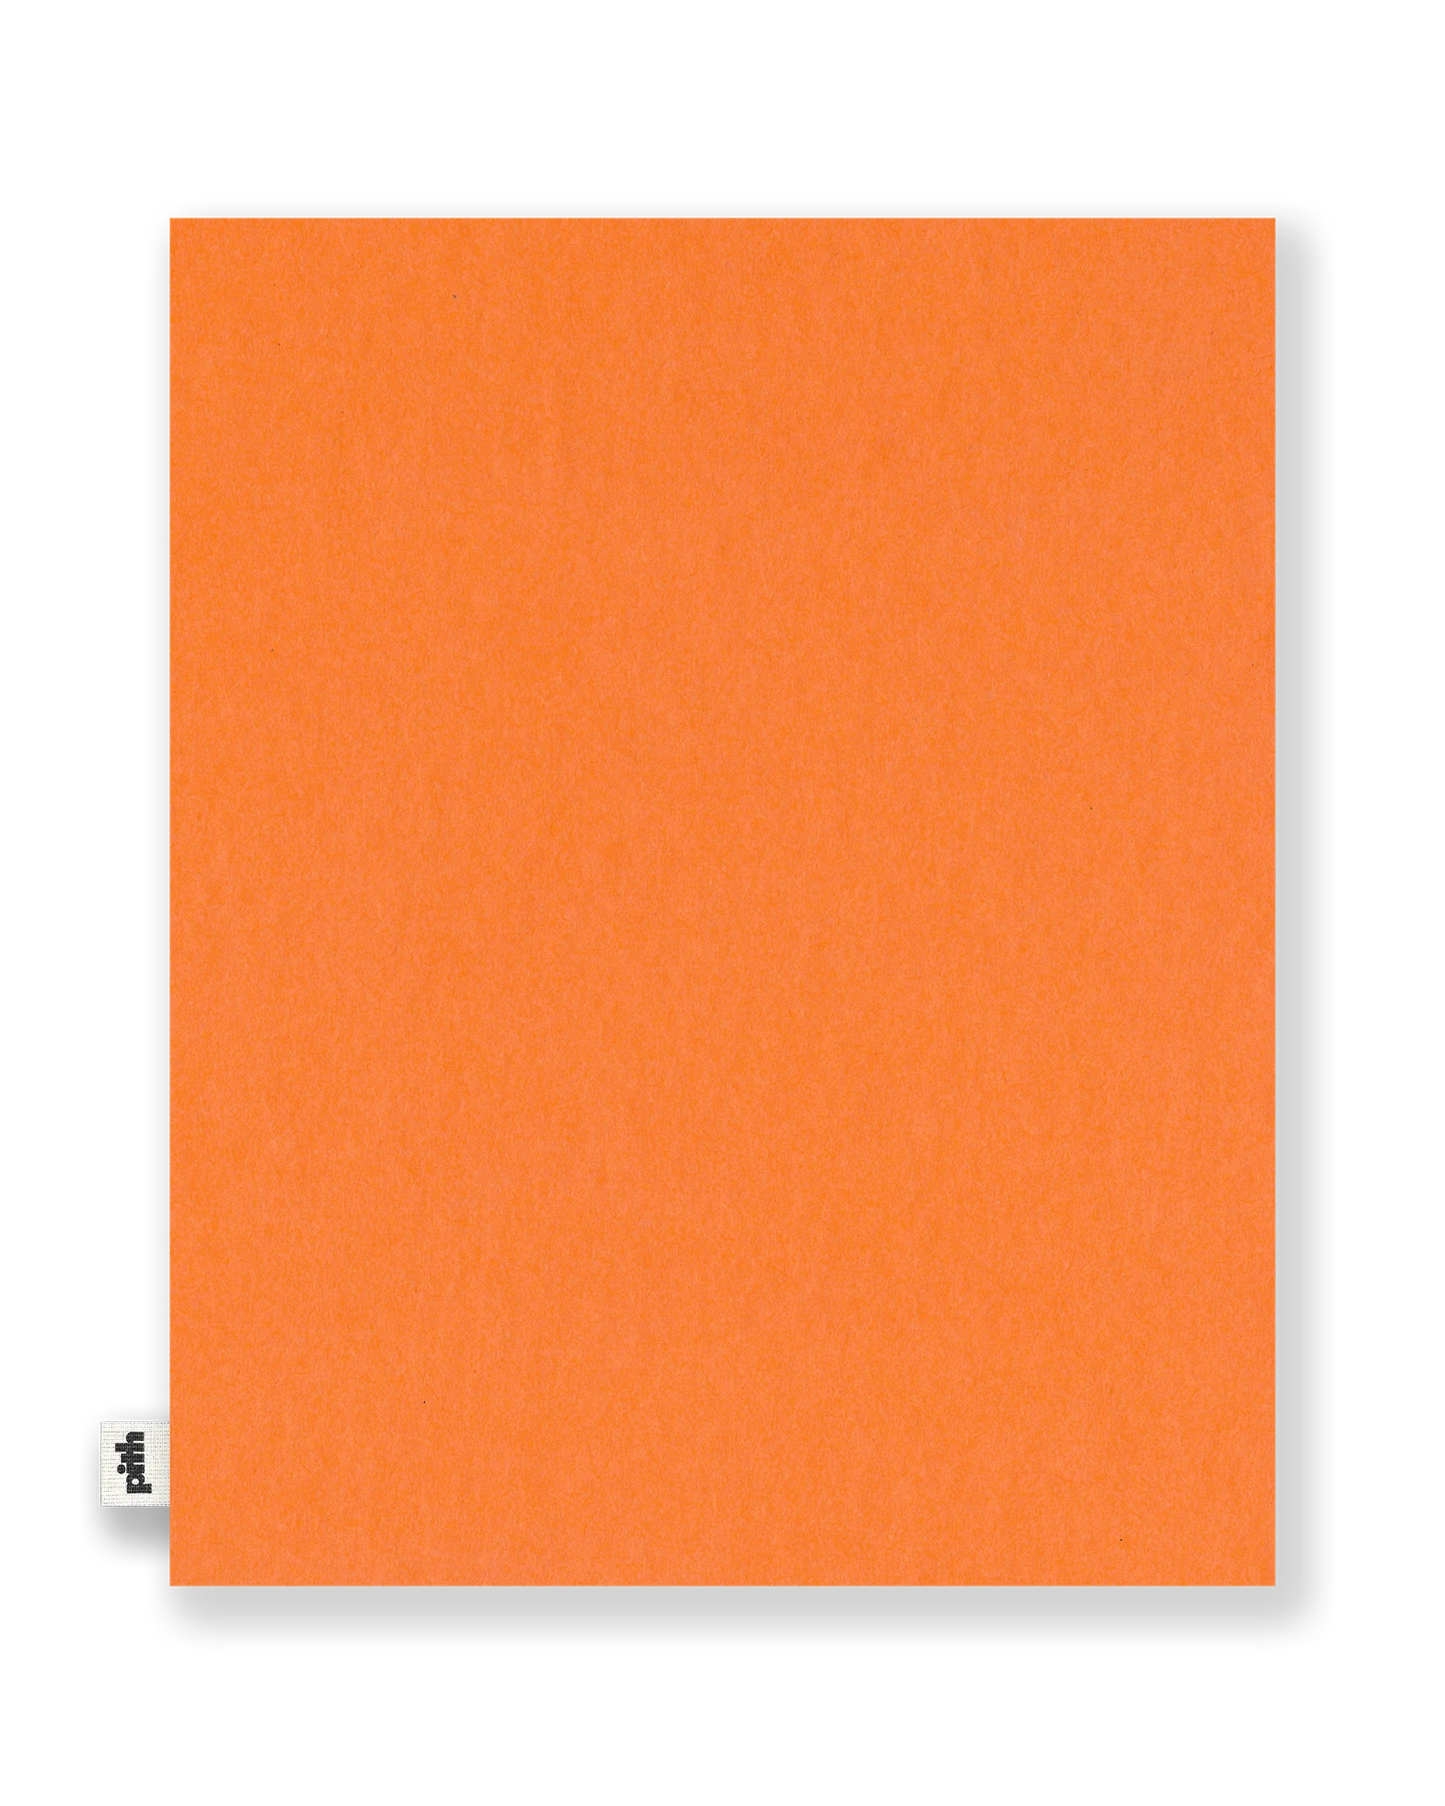 Pith Pomelo Schetsboek Oranje